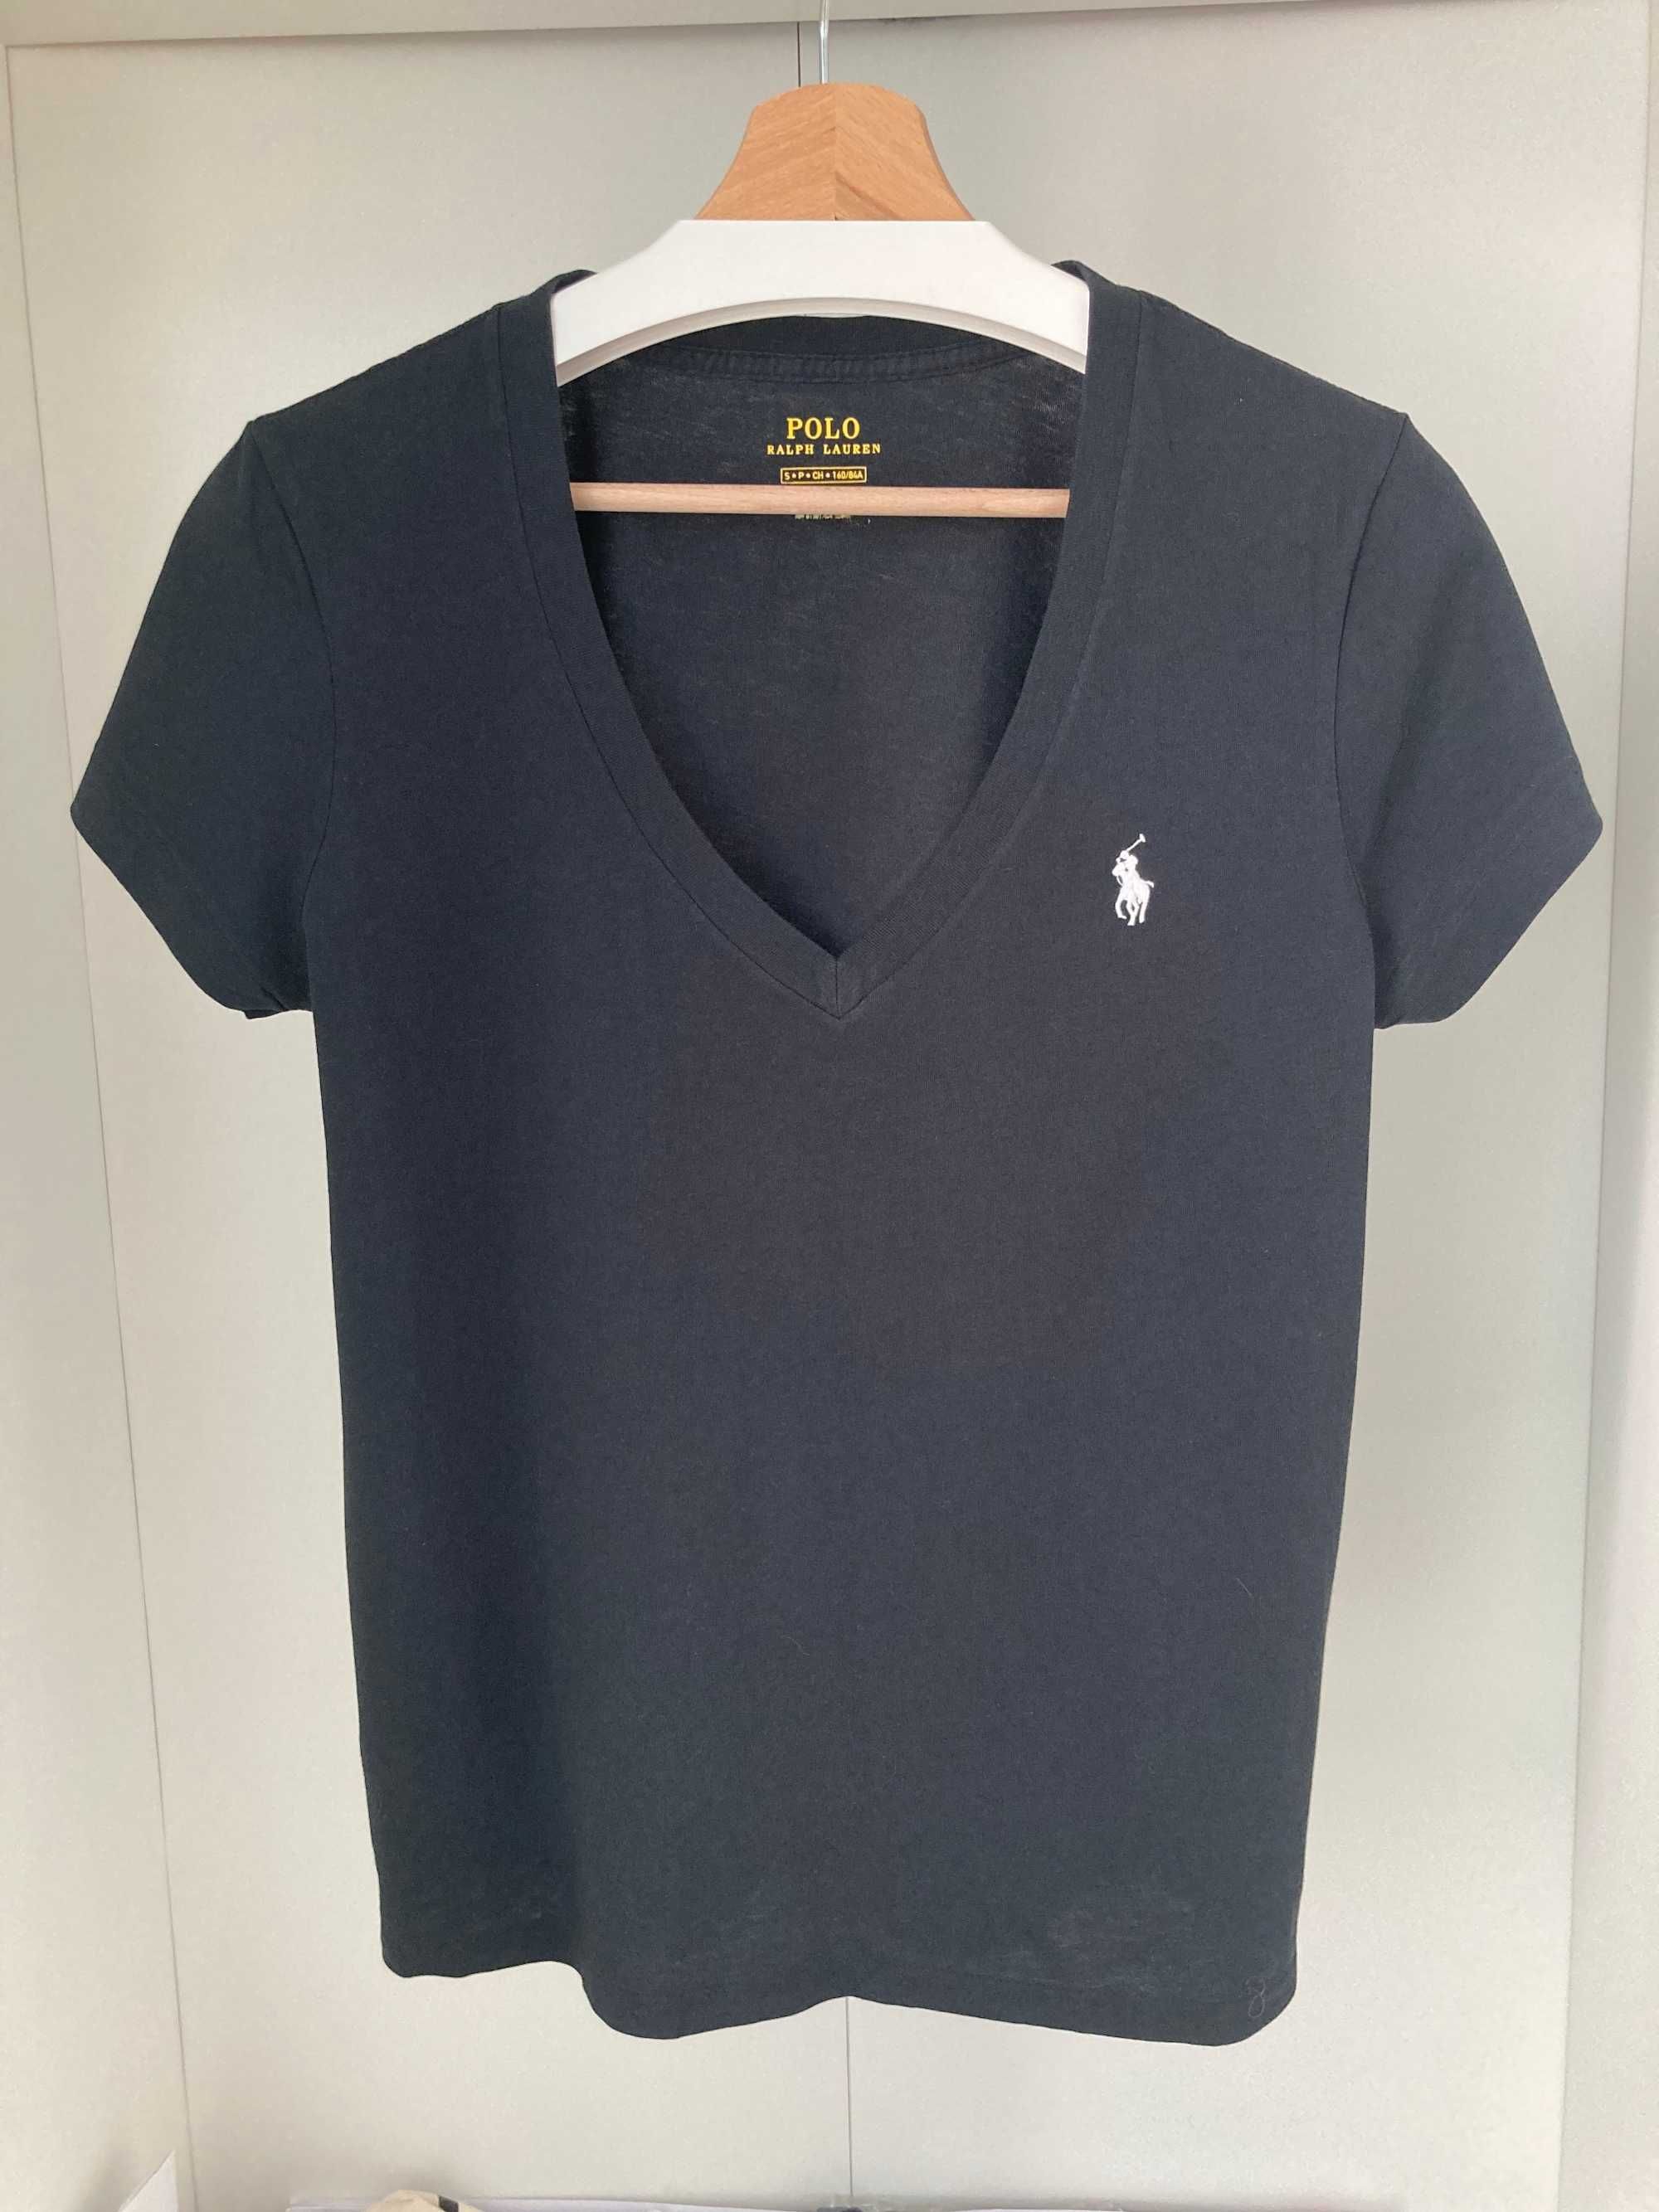 Топ на Polo Ralph Lauren, тениска, S размер, оригинални